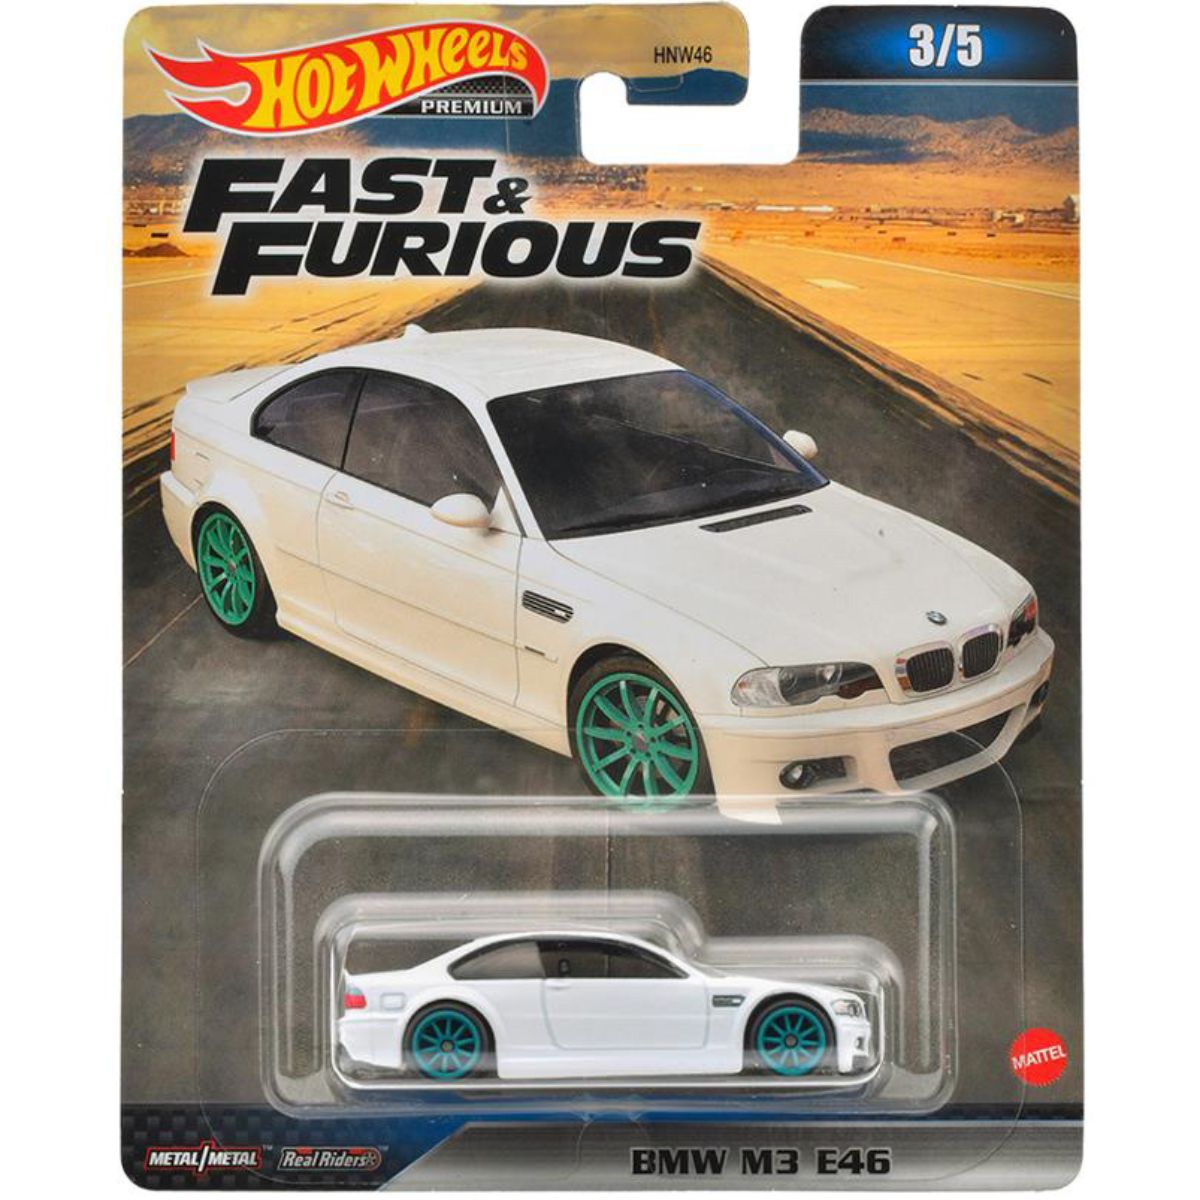 Masinuta din metal, Hot Wheels, Fast and Furious, BMW M3 E46, 1:64, HNW52